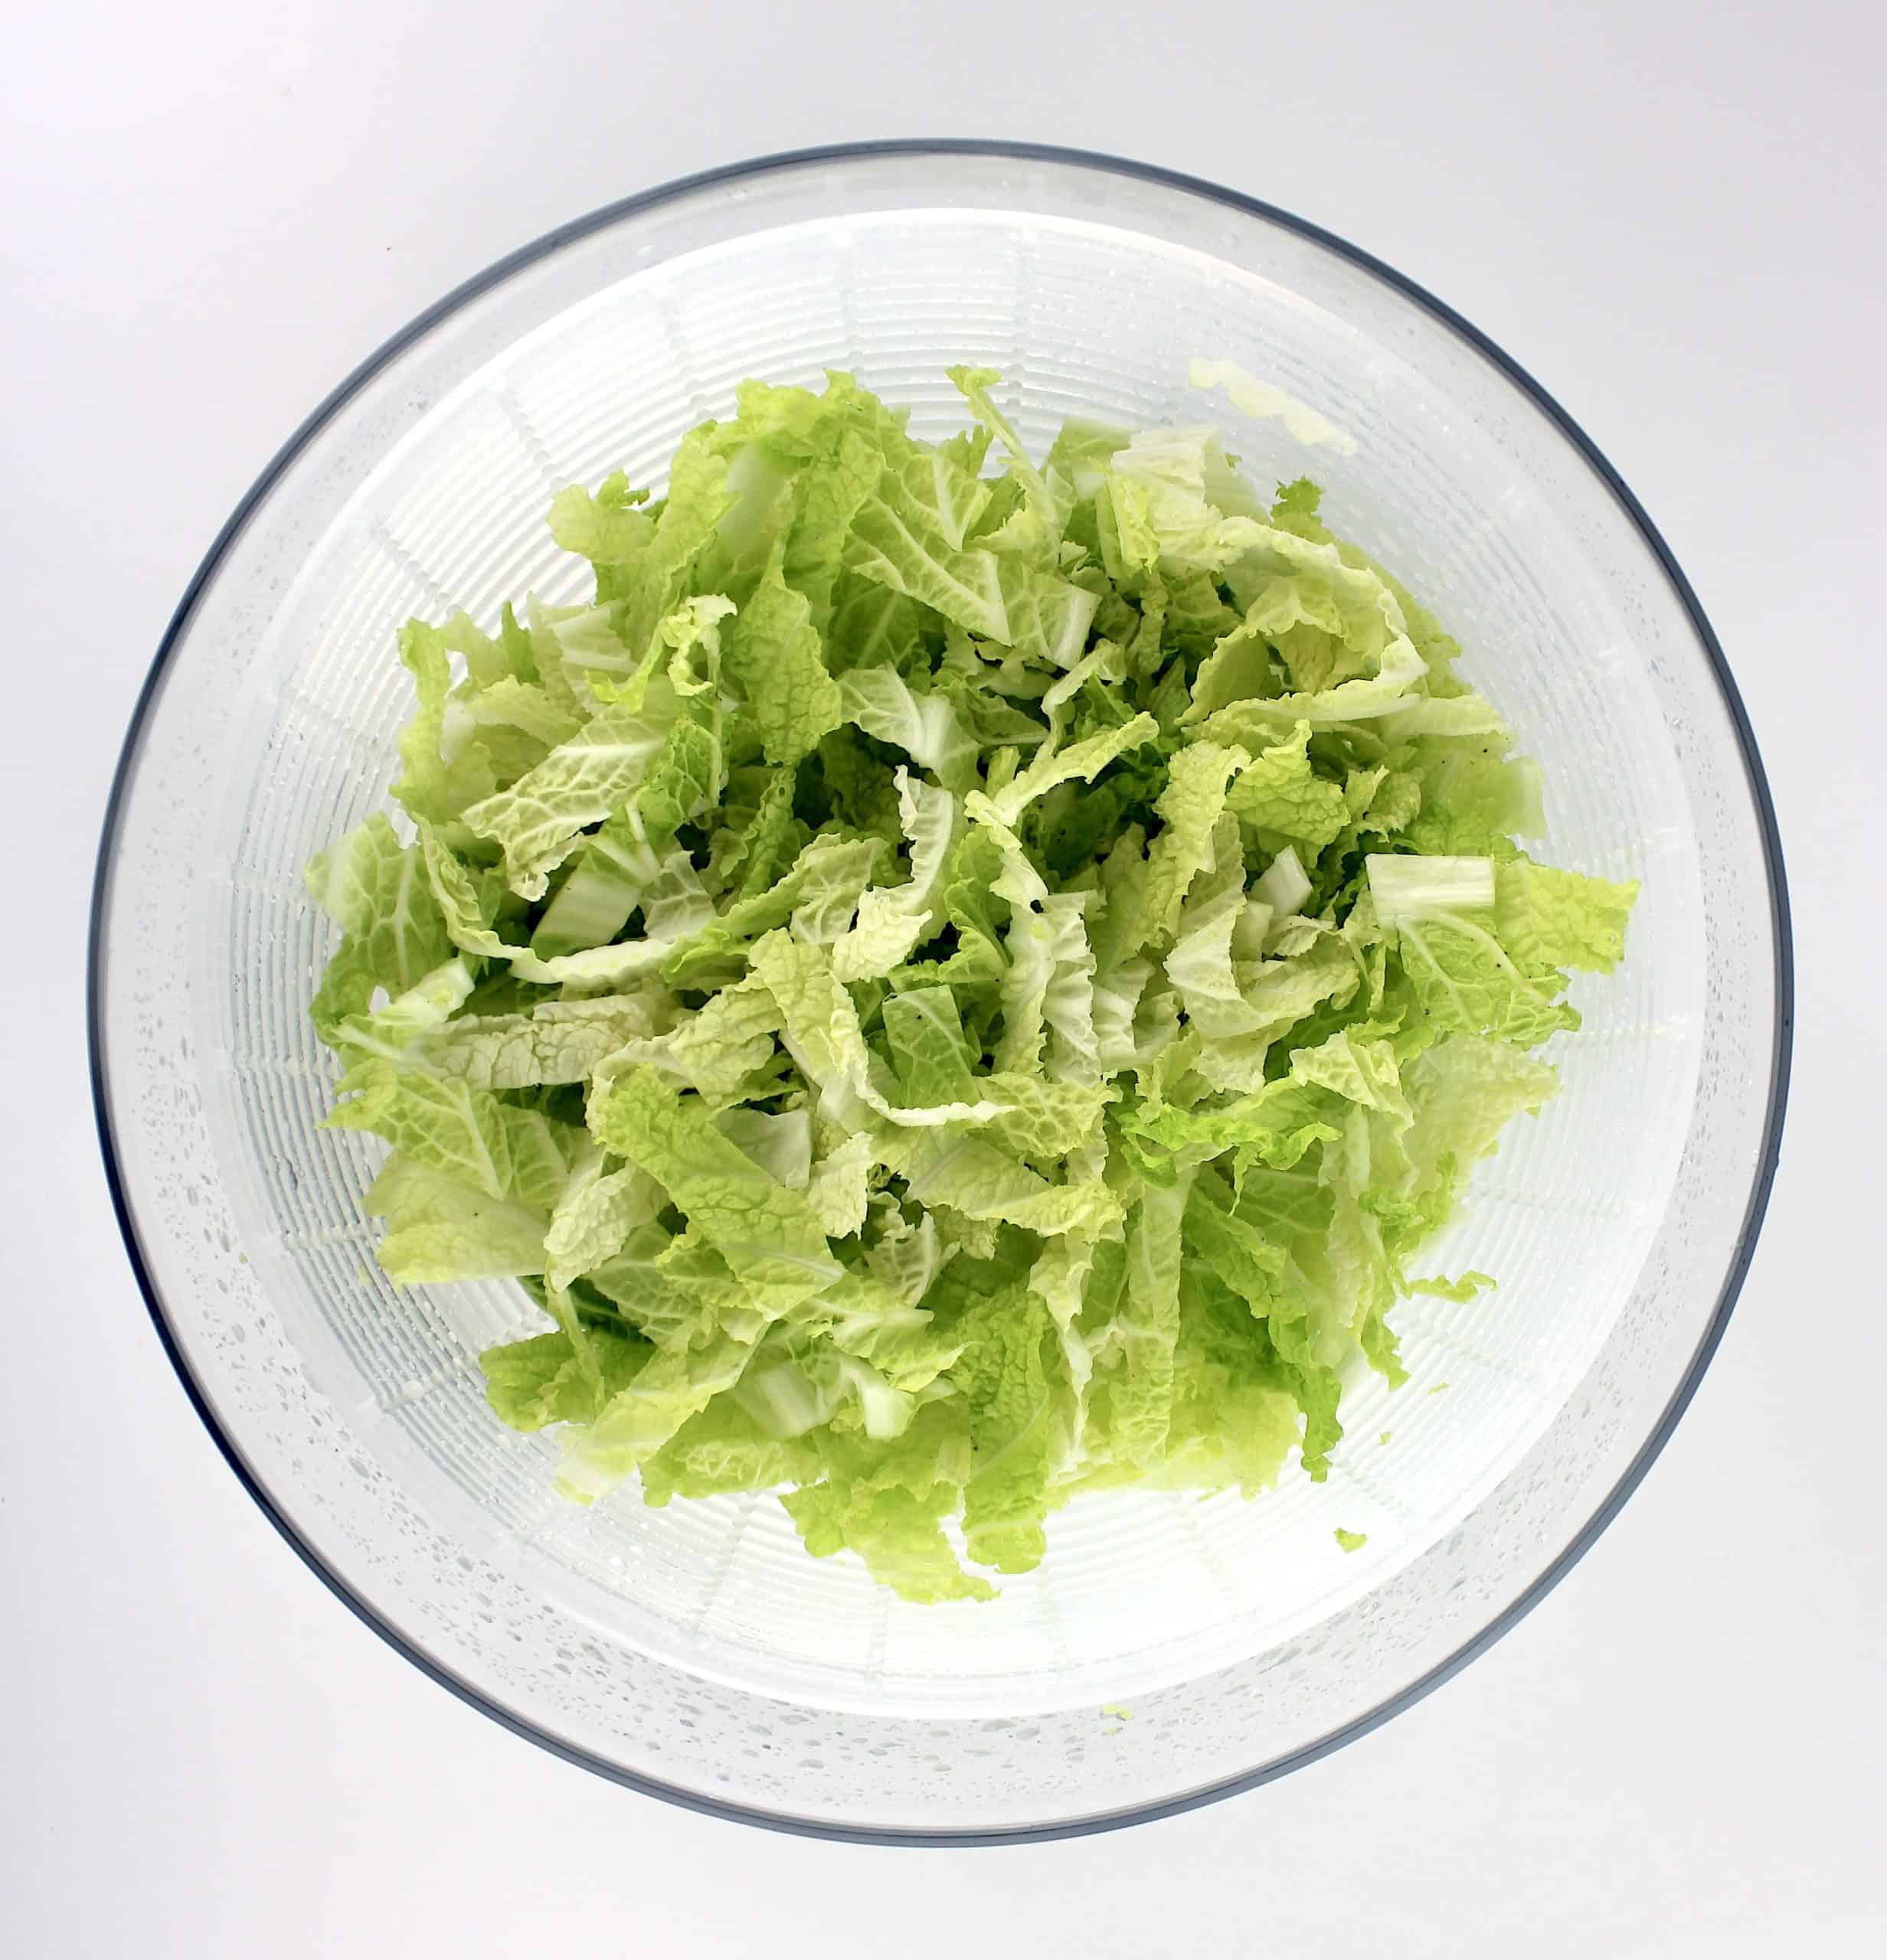 shredded napa cabbage in salad spinner bowl